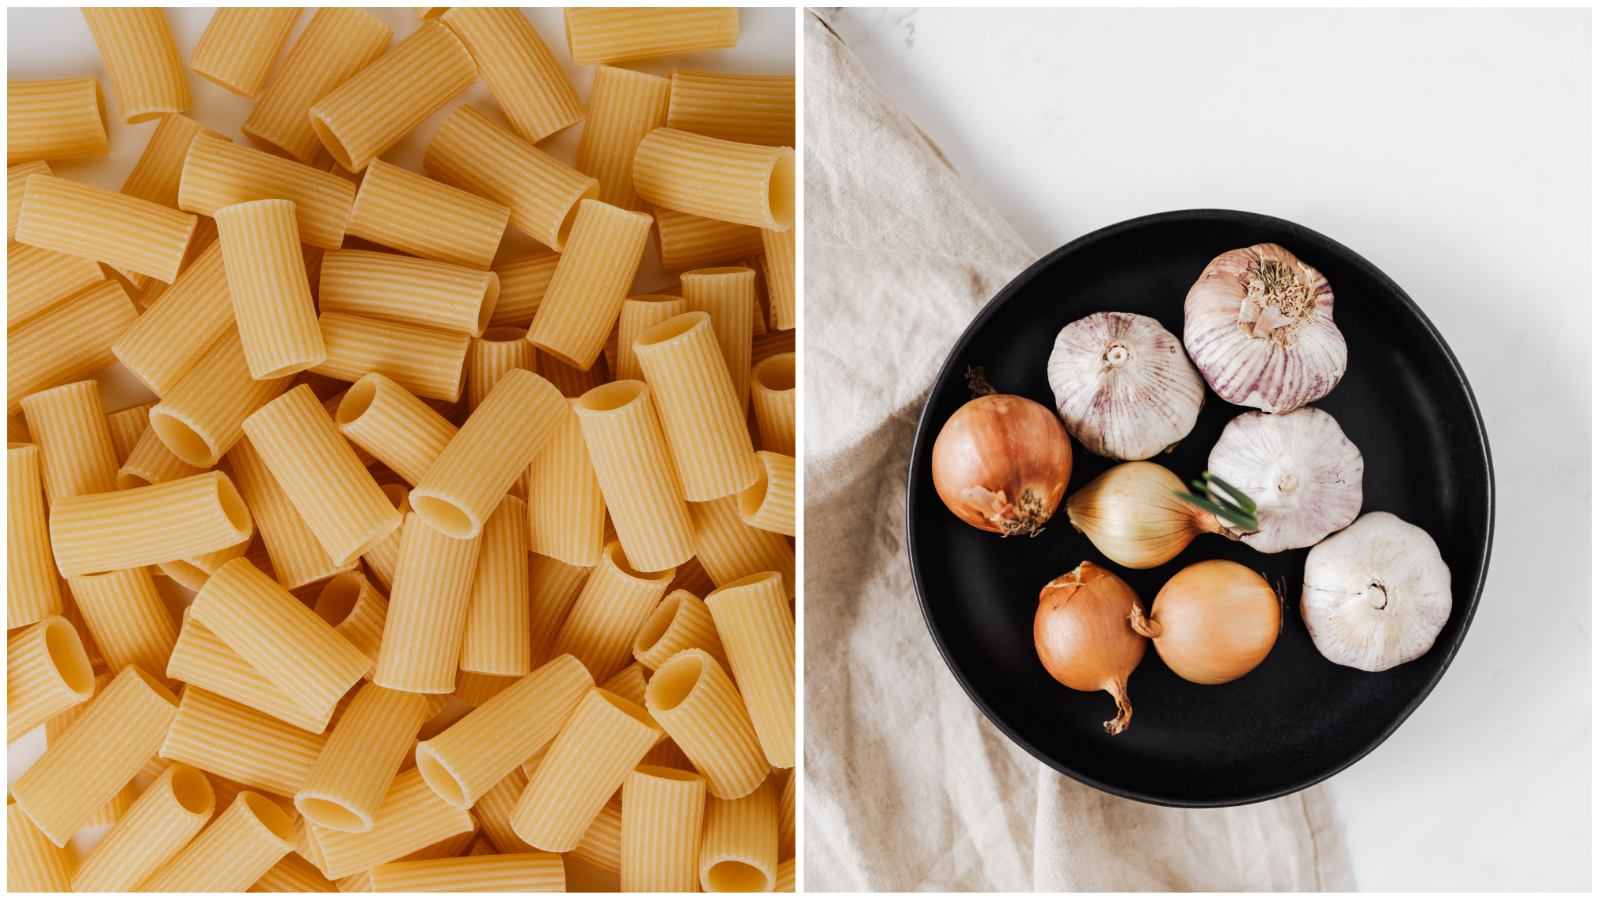 French Onion Pasta: Nakon feta paste, TikTok je osvojilo novo jelo s tjesteninom koje moramo probati